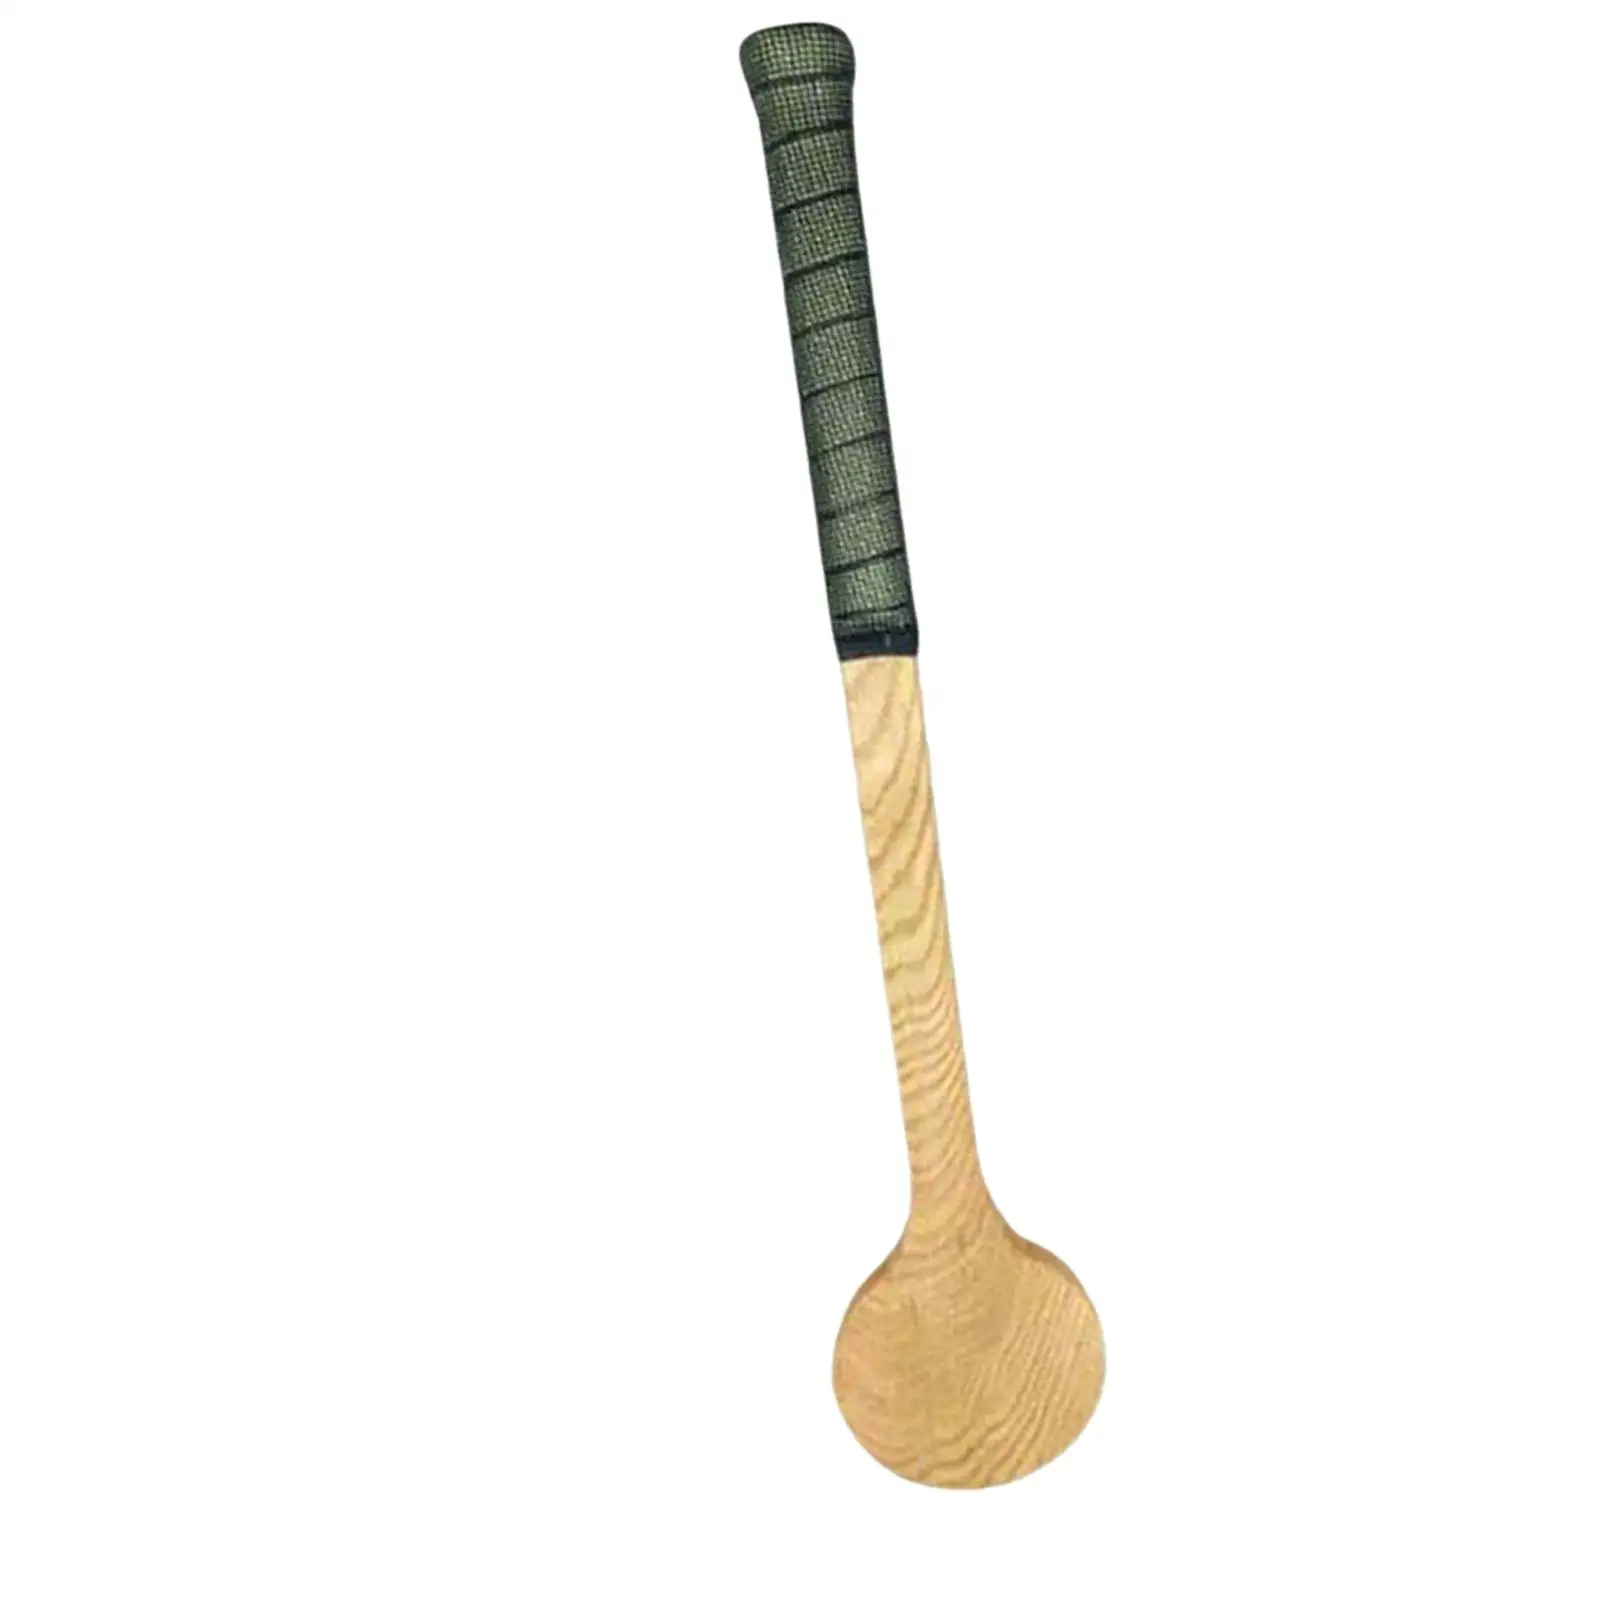 Tennis Pointer Tennis Wooden Spoon Anti-Slip  60x12cm Sweet  350 Grams Tennis Sweet Pointer Spoon for Accurately Hit Beginner